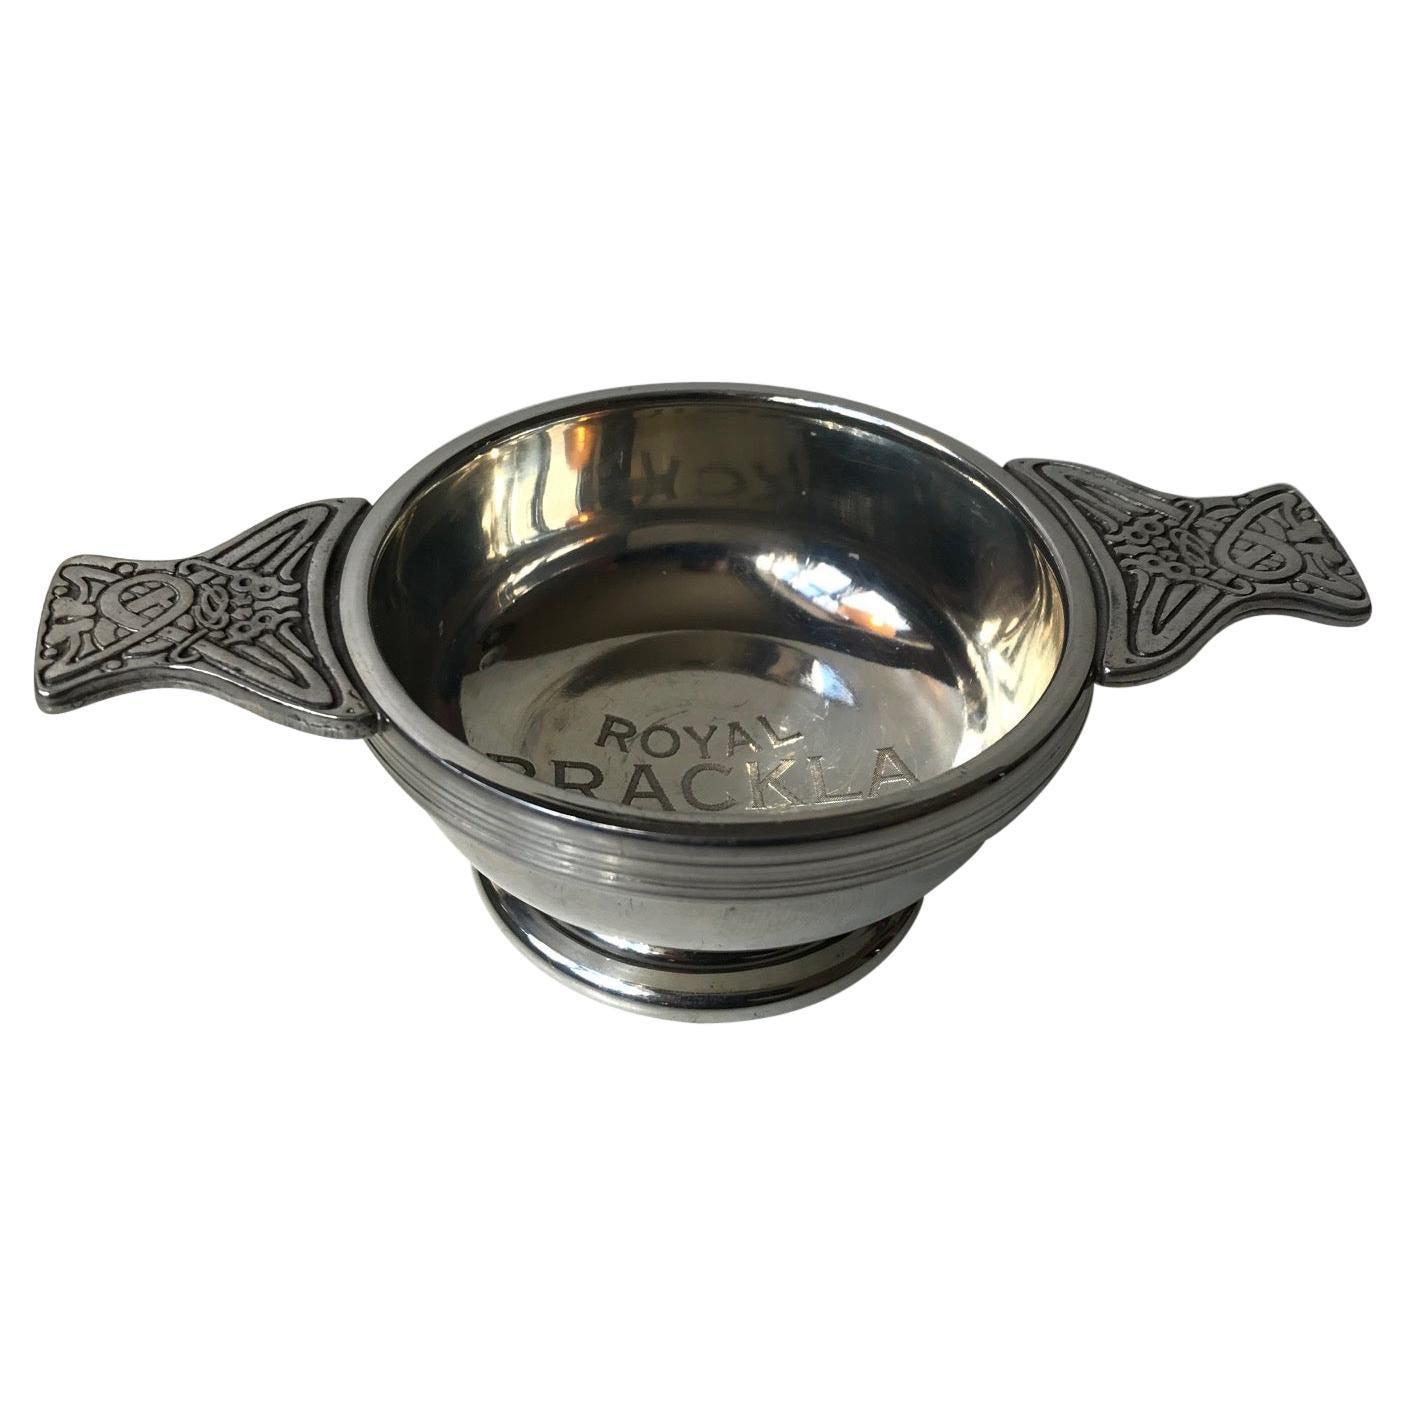 Royal Brackla Quaich Single Malt Tasting Cup, Scotland 1990s For Sale